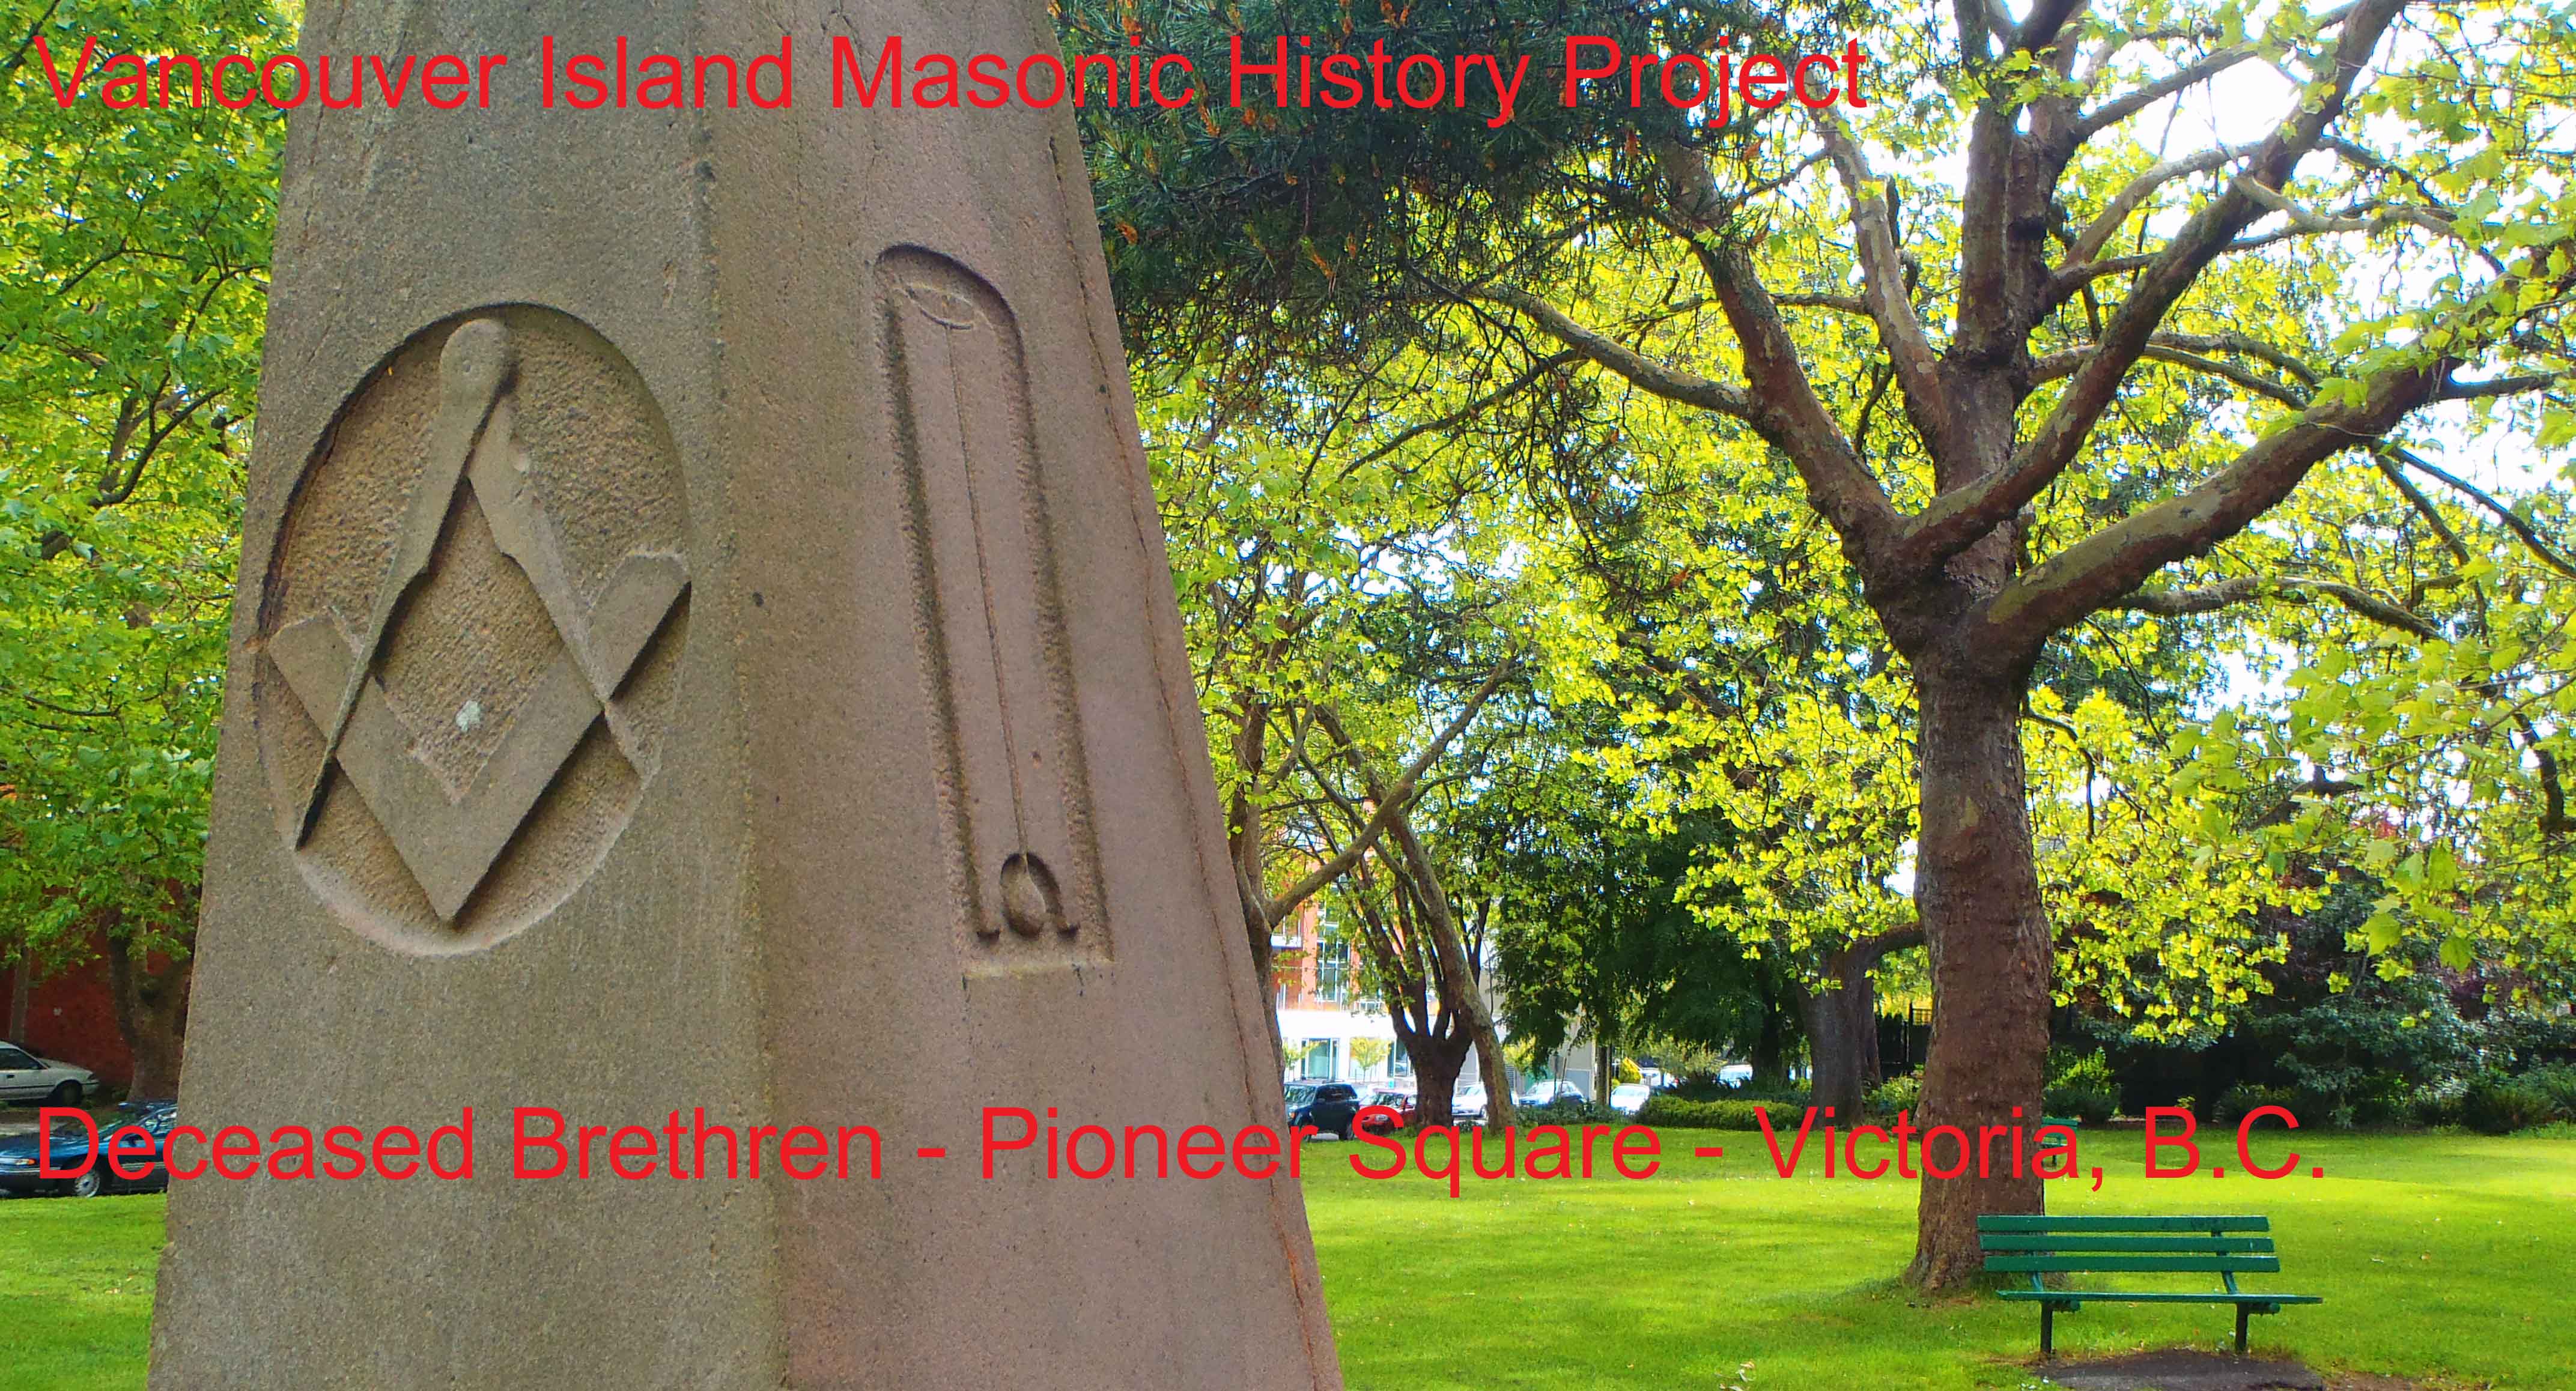 Pioneer Square, Victoiria, B.C.-Masonic Interments-Brother George Pearkes